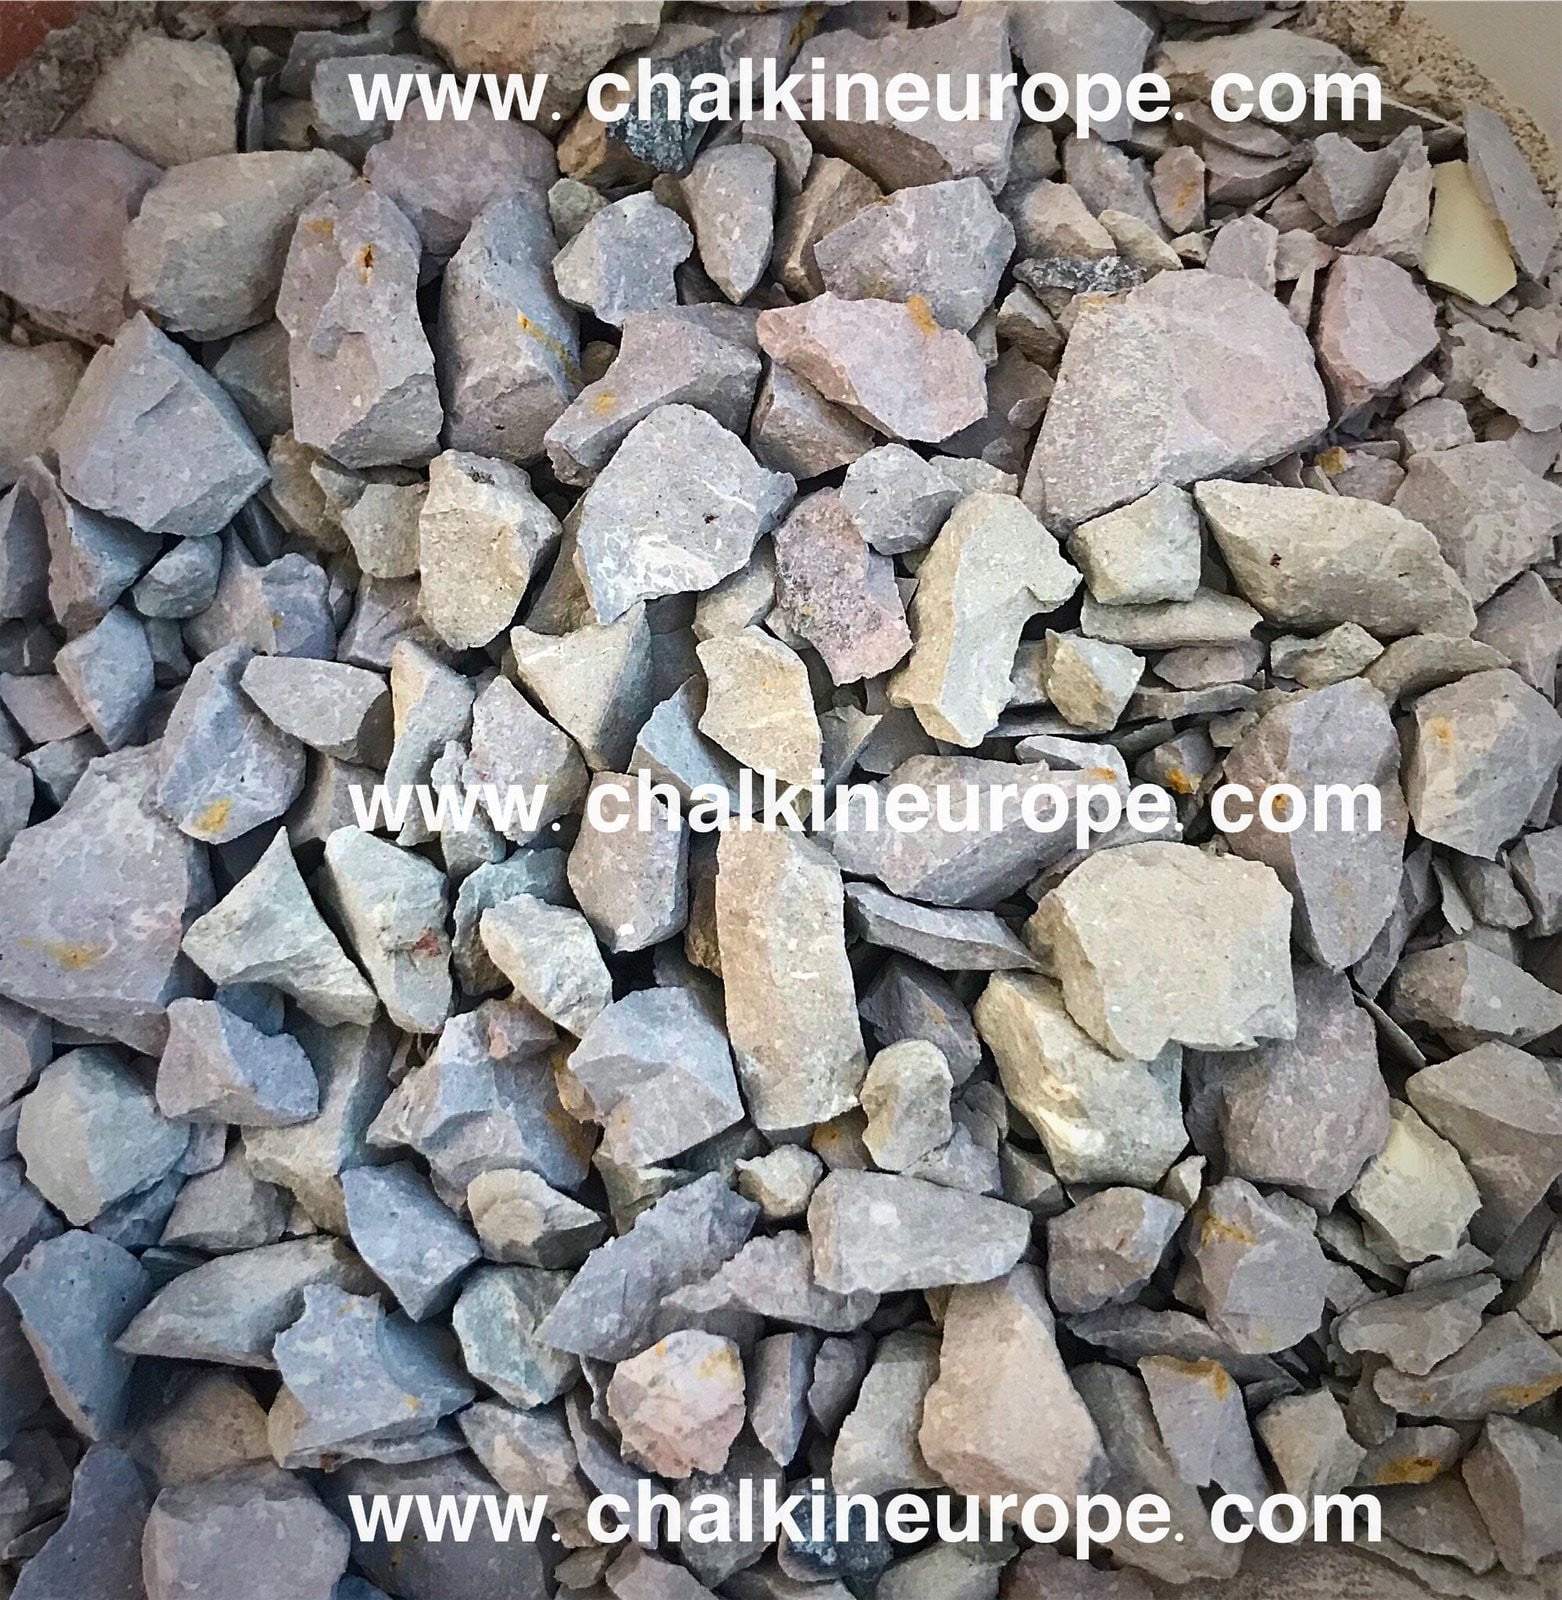 Full Roasted Nakumatt Clay Bites - Chalkineurope